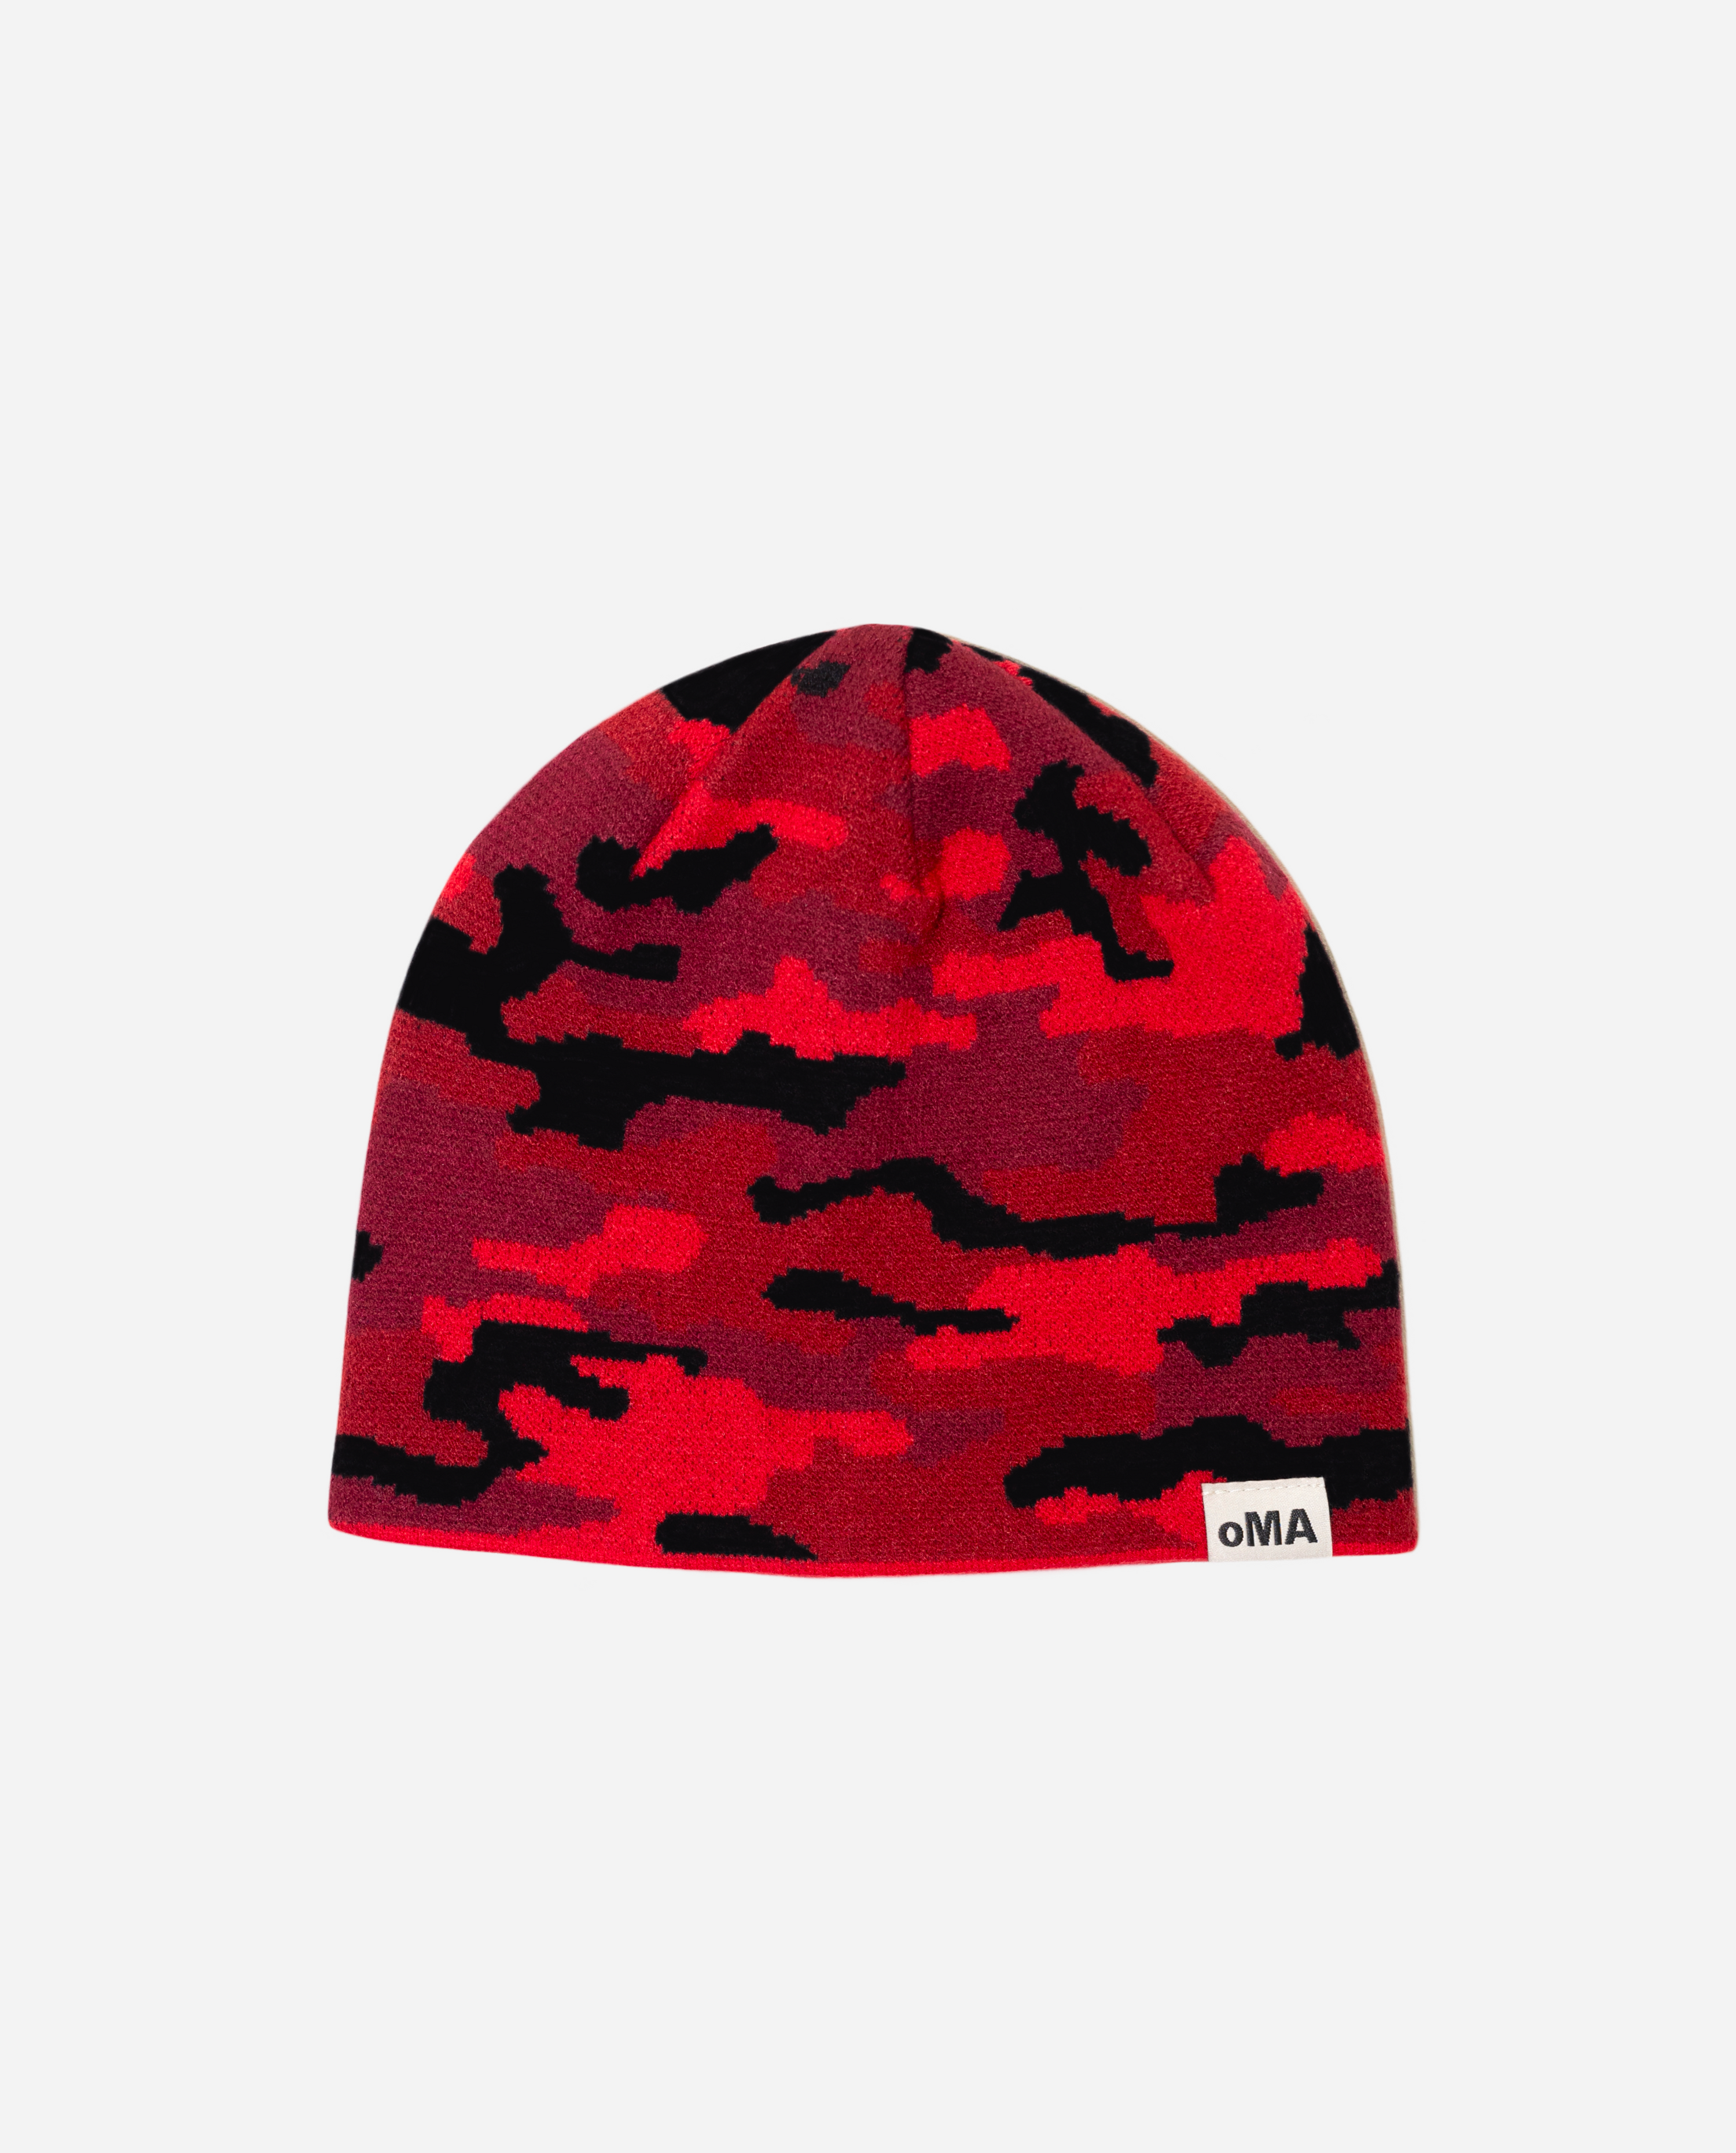 oMA CAMO SKULL CAP (RED)